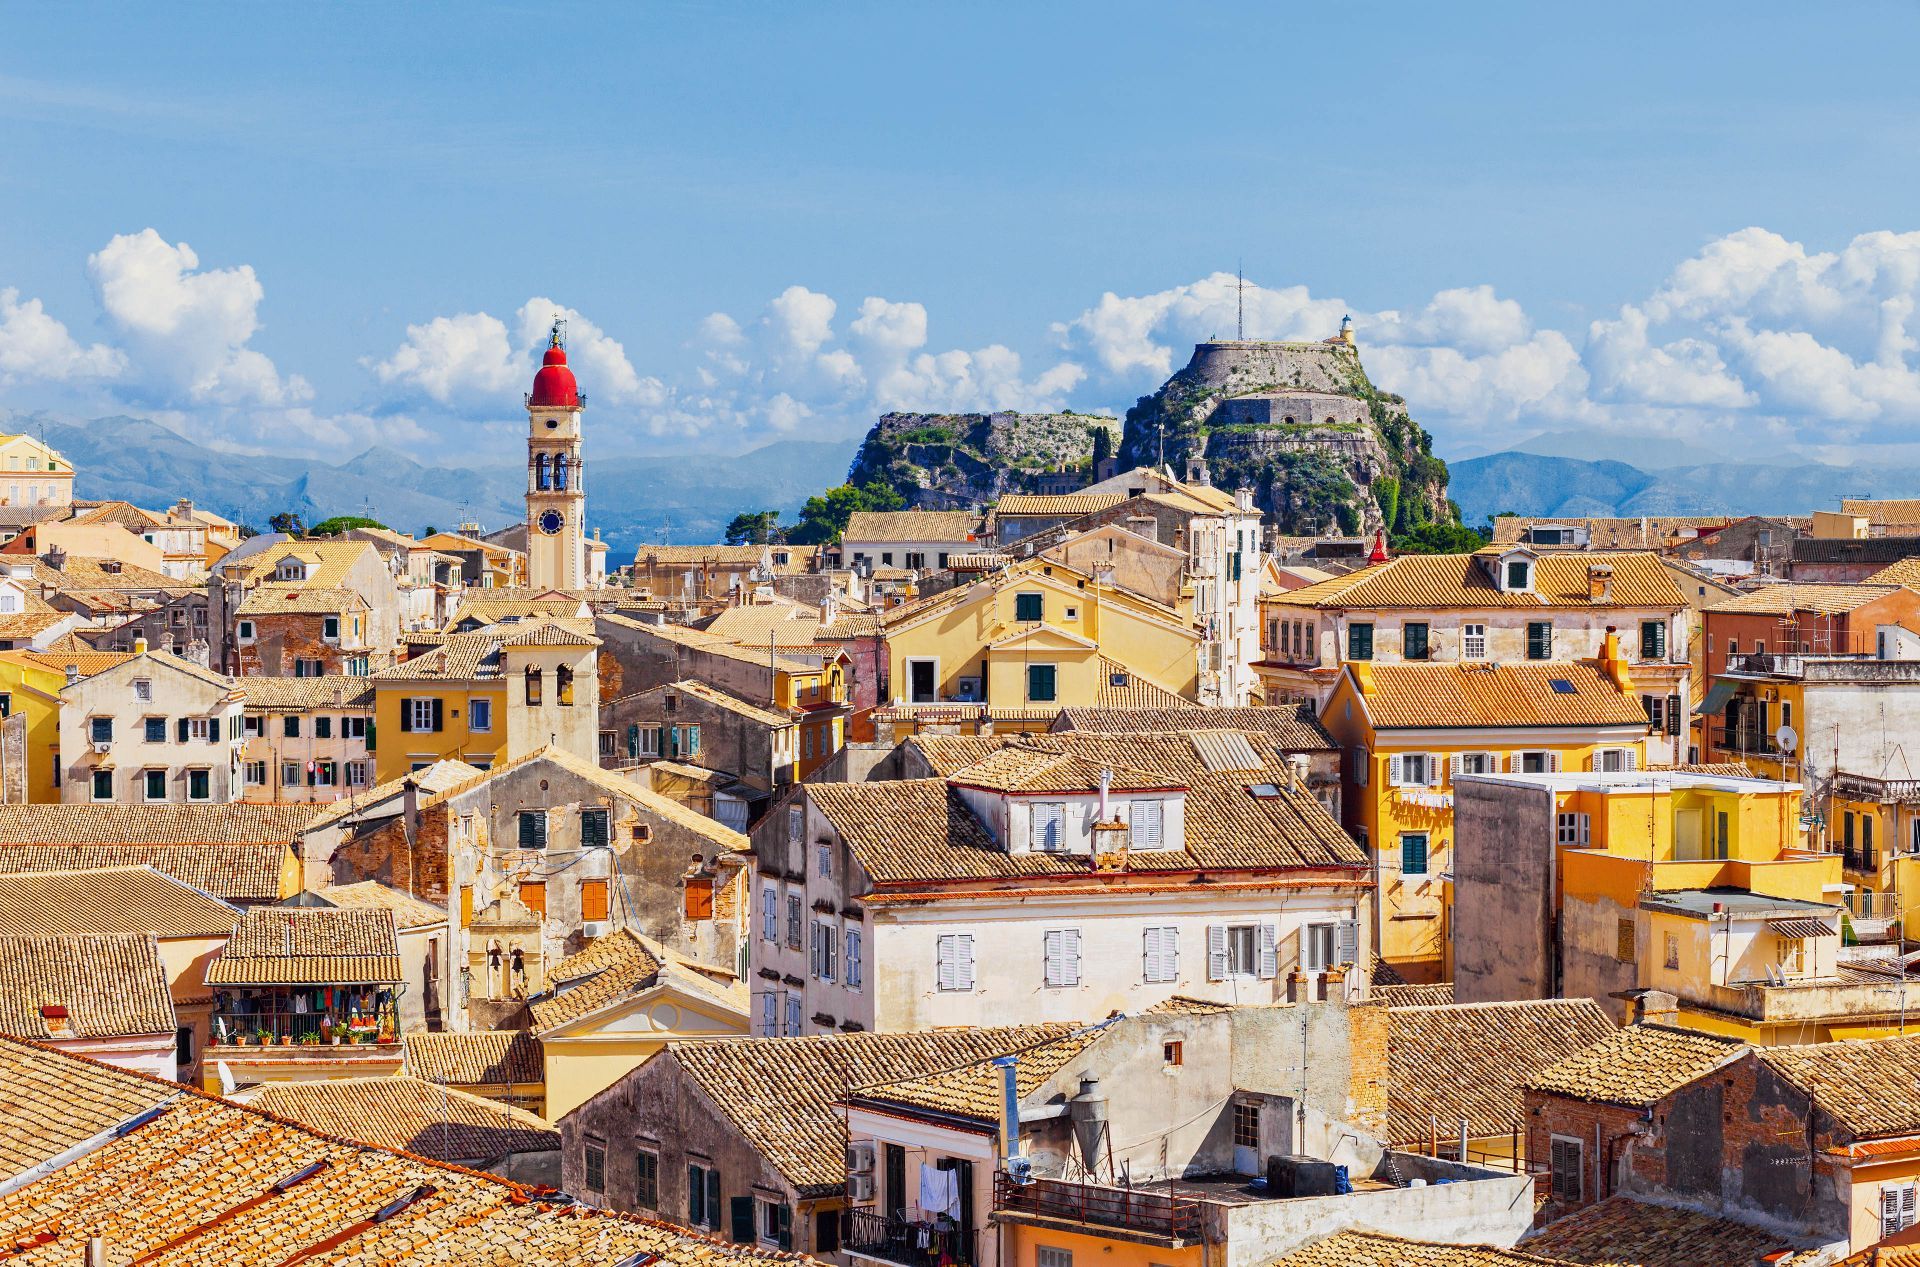 The main town of Corfu Island